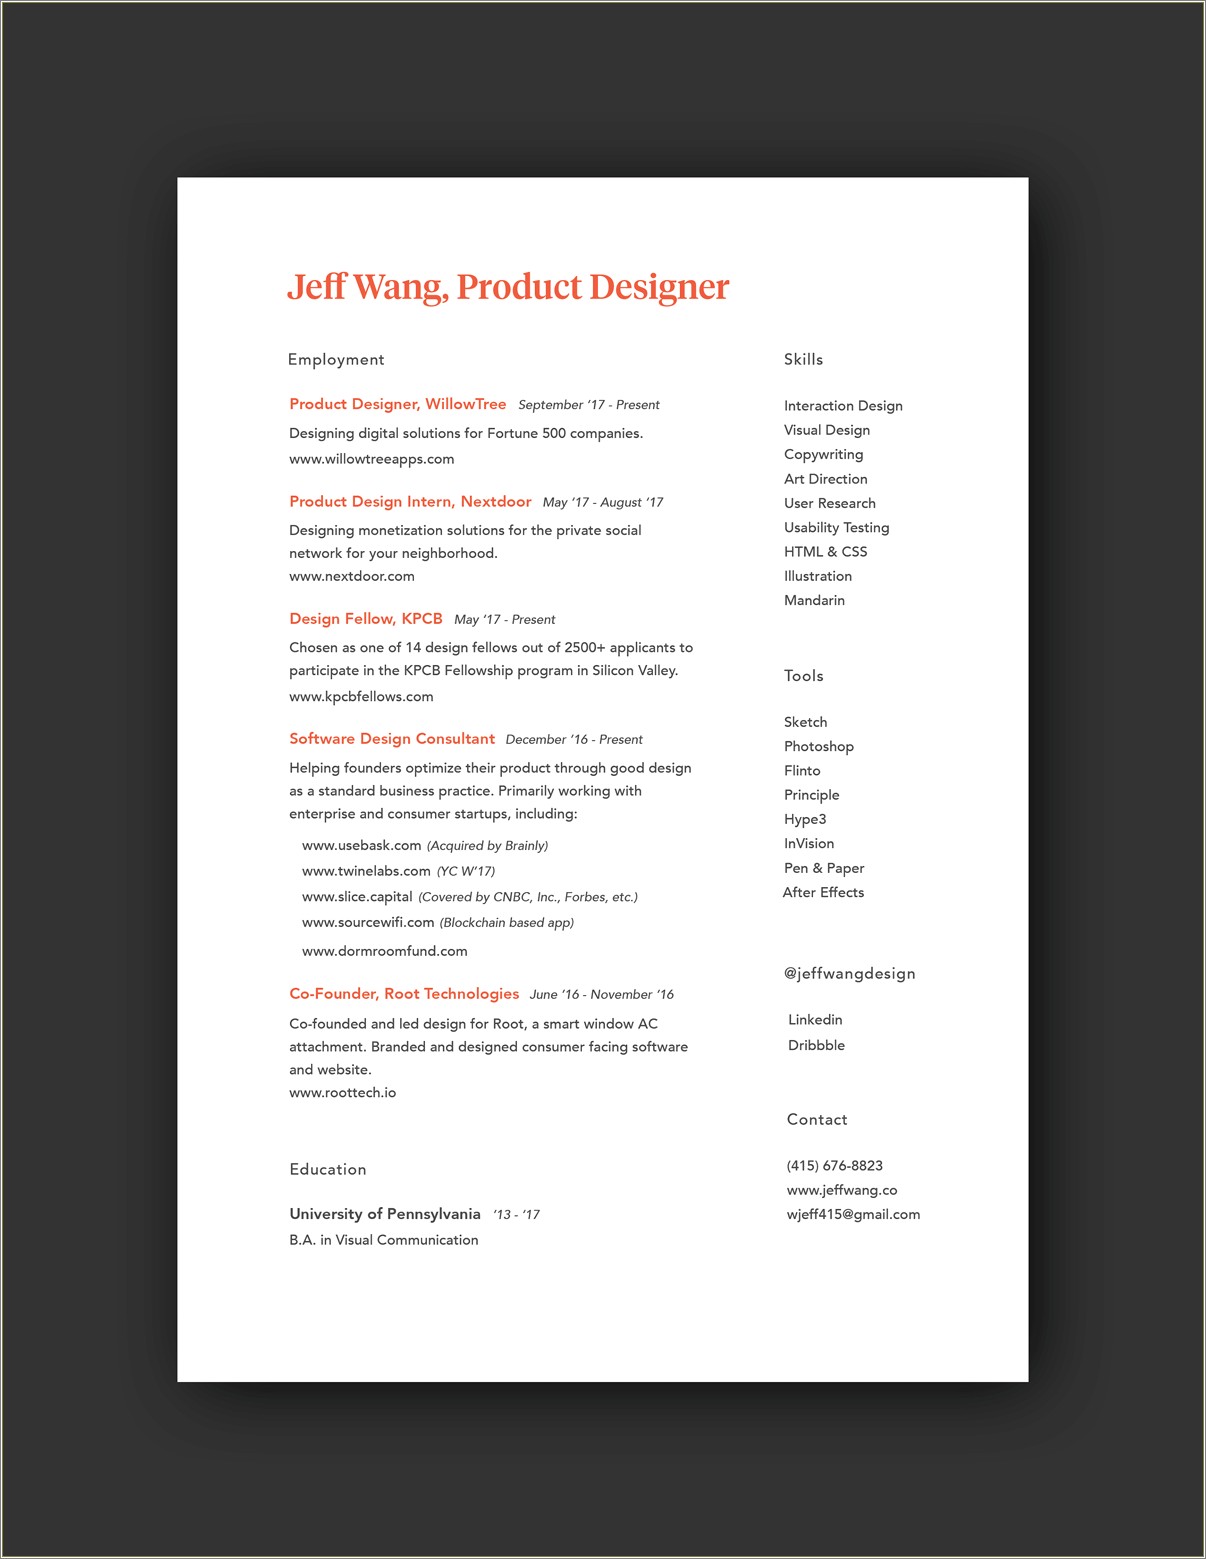 Graphic Design No Relevant Experience Resume Sample